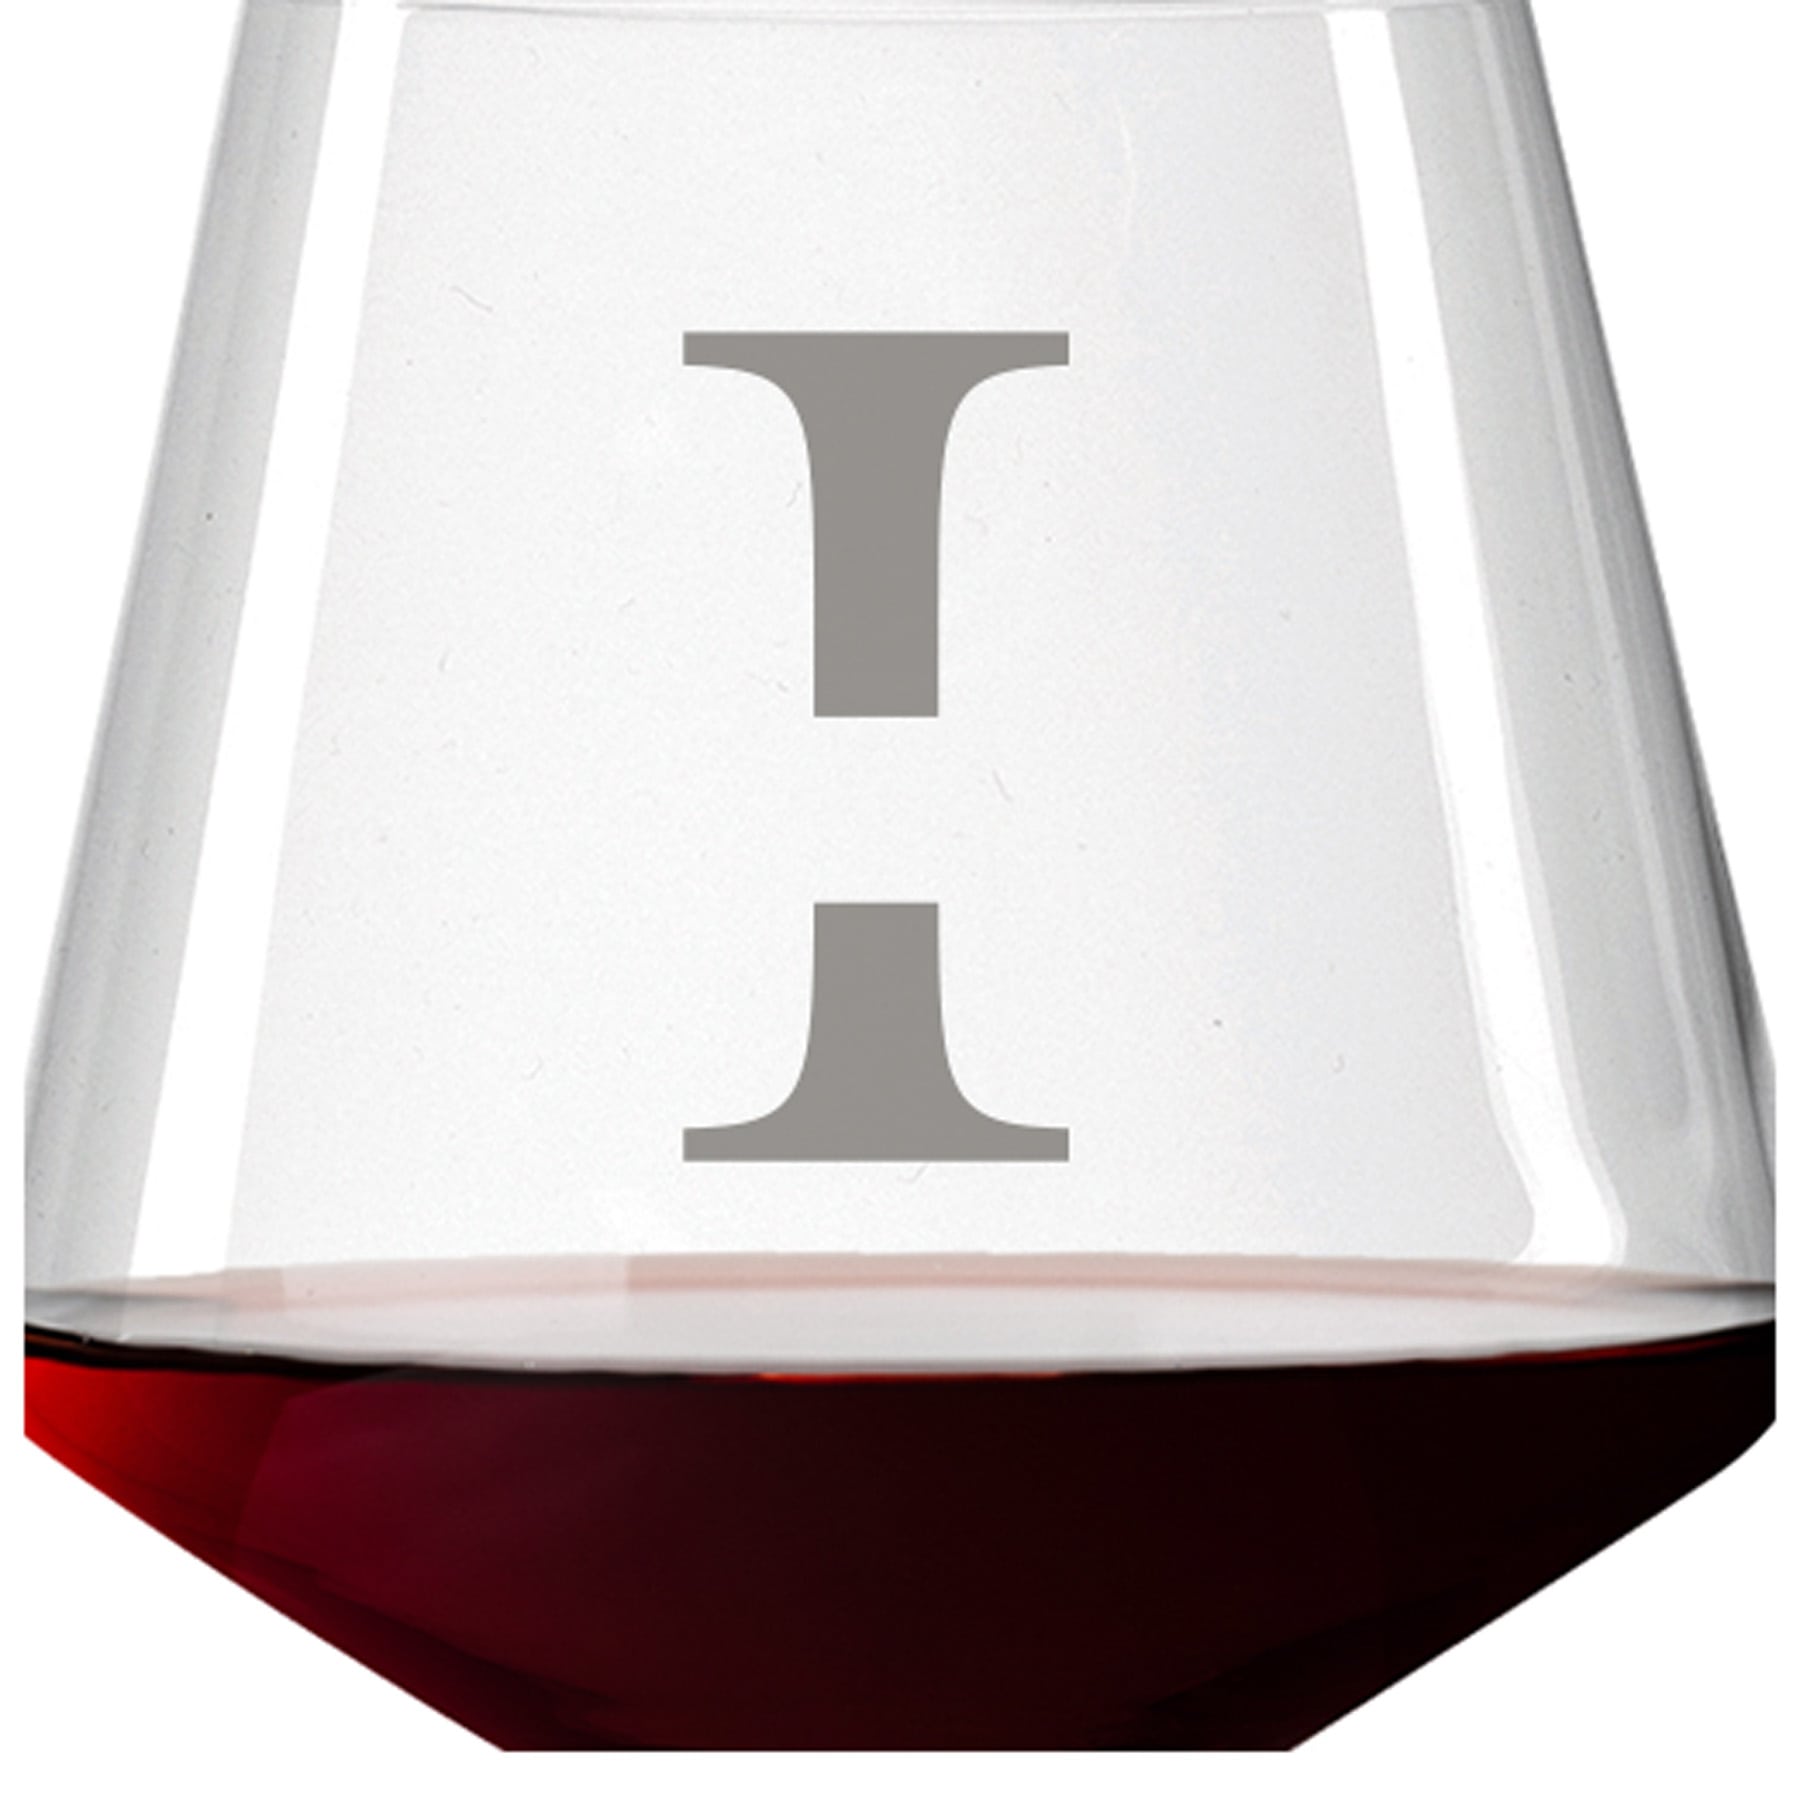 Leonardo Burgunderglas Rotweinglas PUCCINI 730ml mit Namen oder Wunschtext graviert (Initialen)